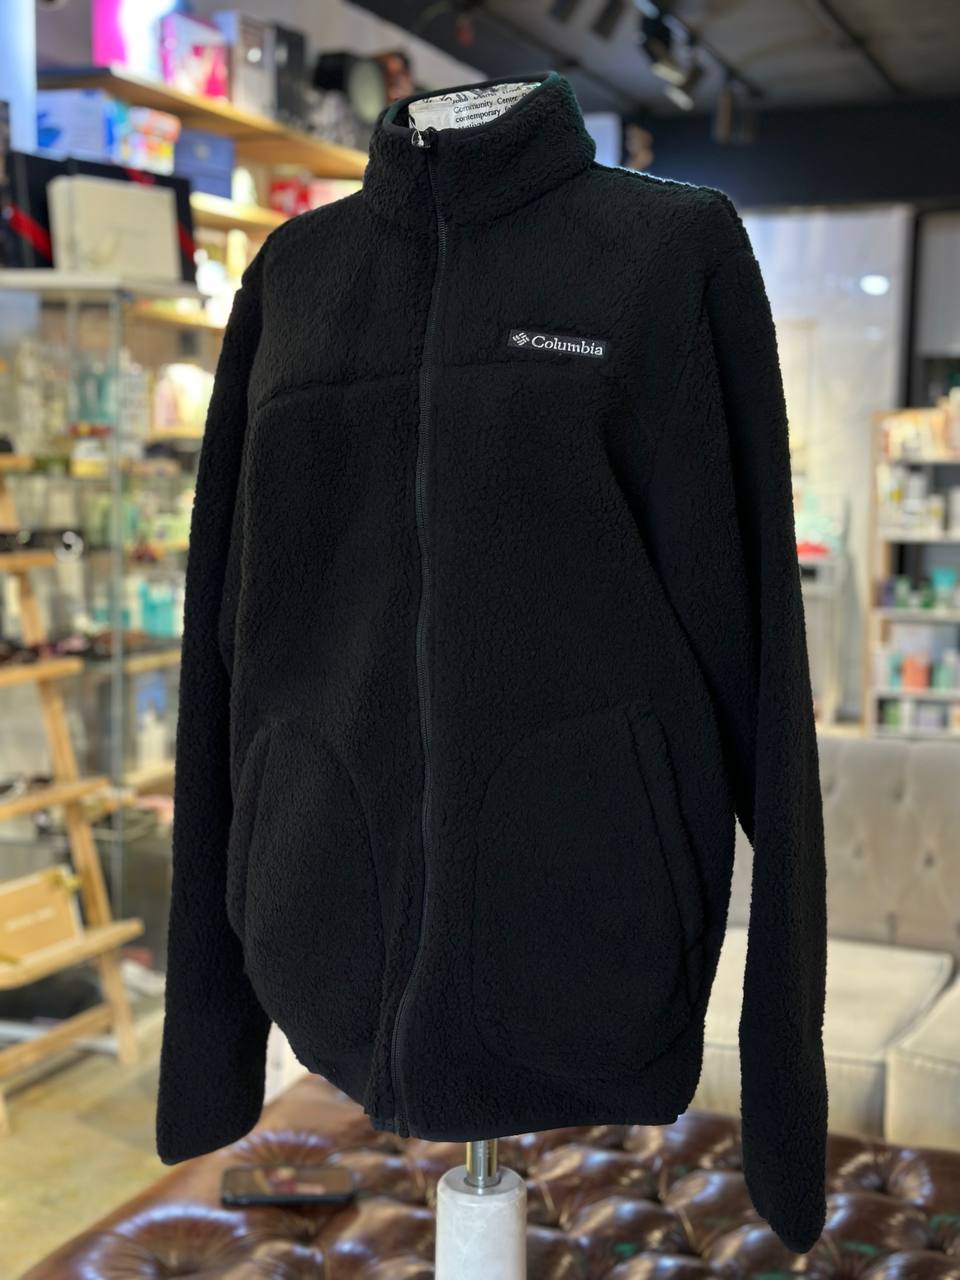 Columbia jacket with zipper